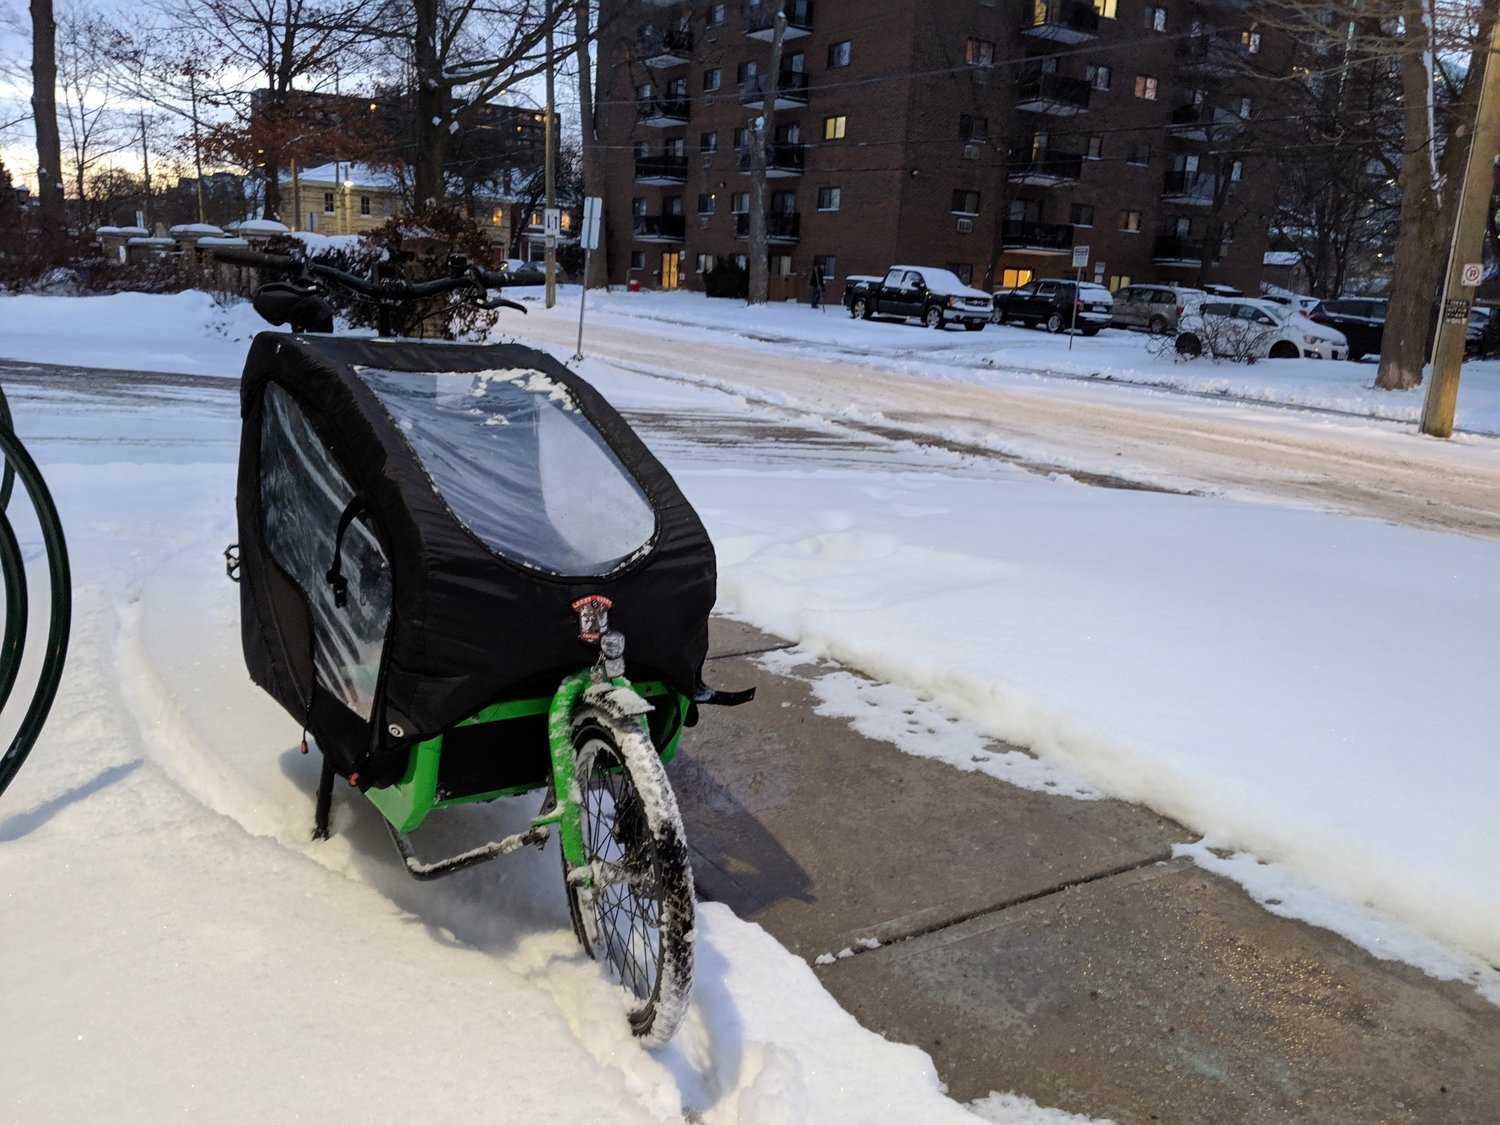 The green Bullitt bike on another snowy street